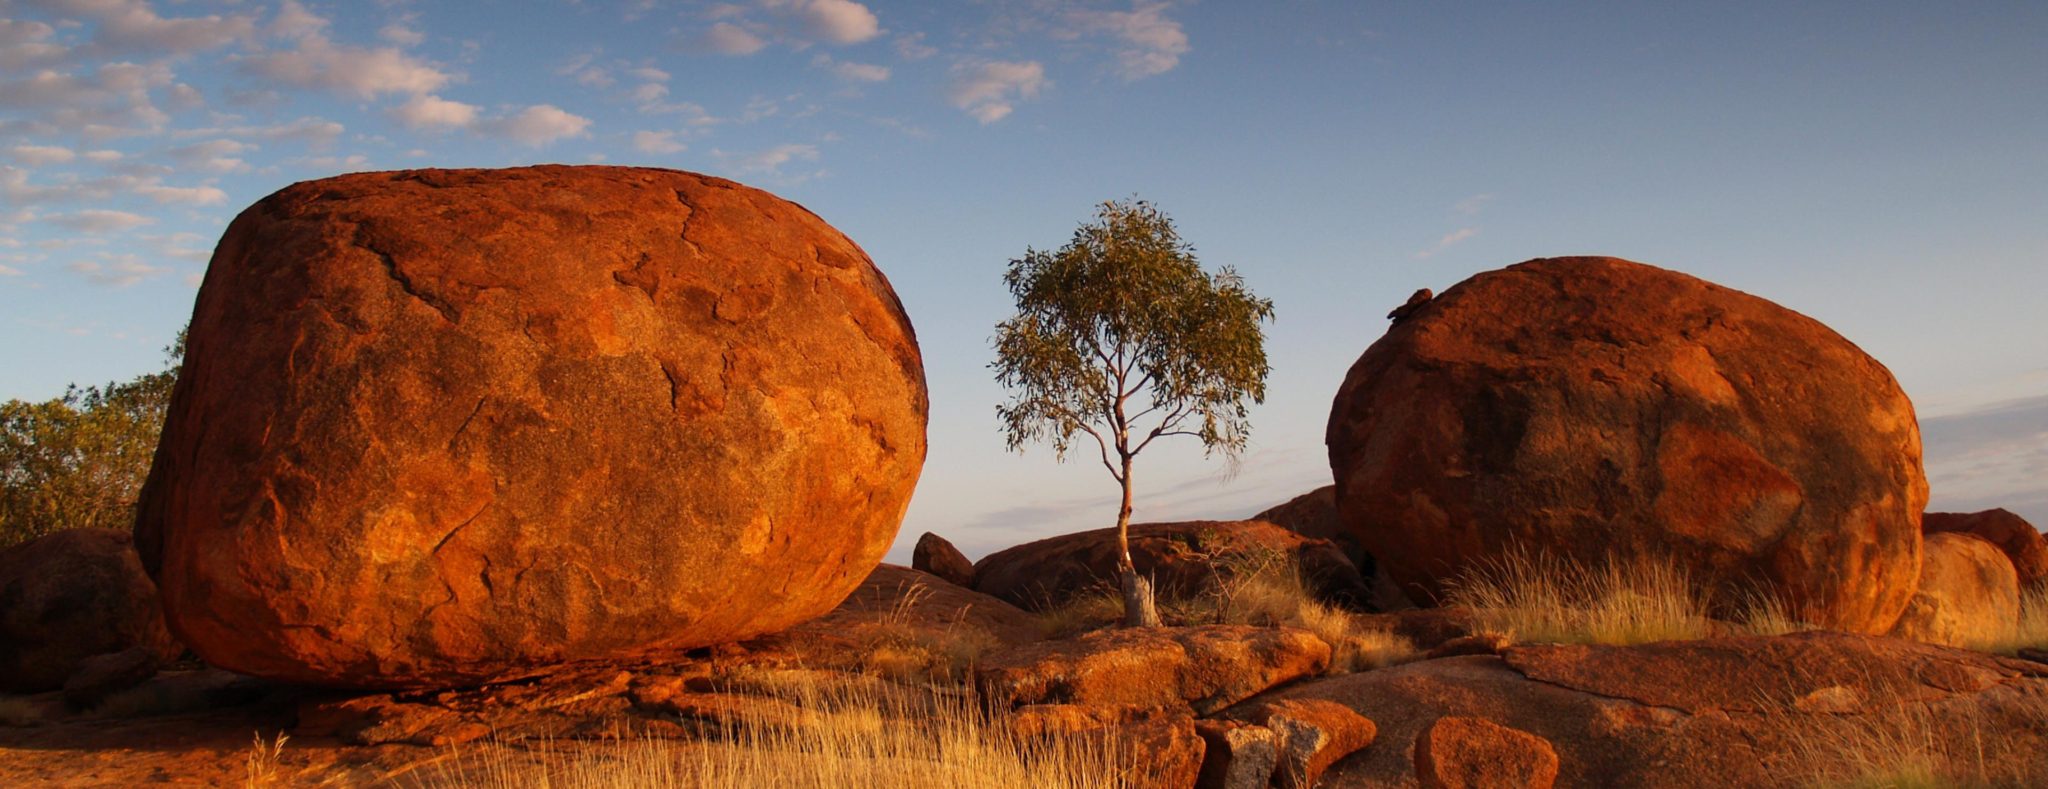 Creating Stories Planet Downunder Austalië - Devil Marbles